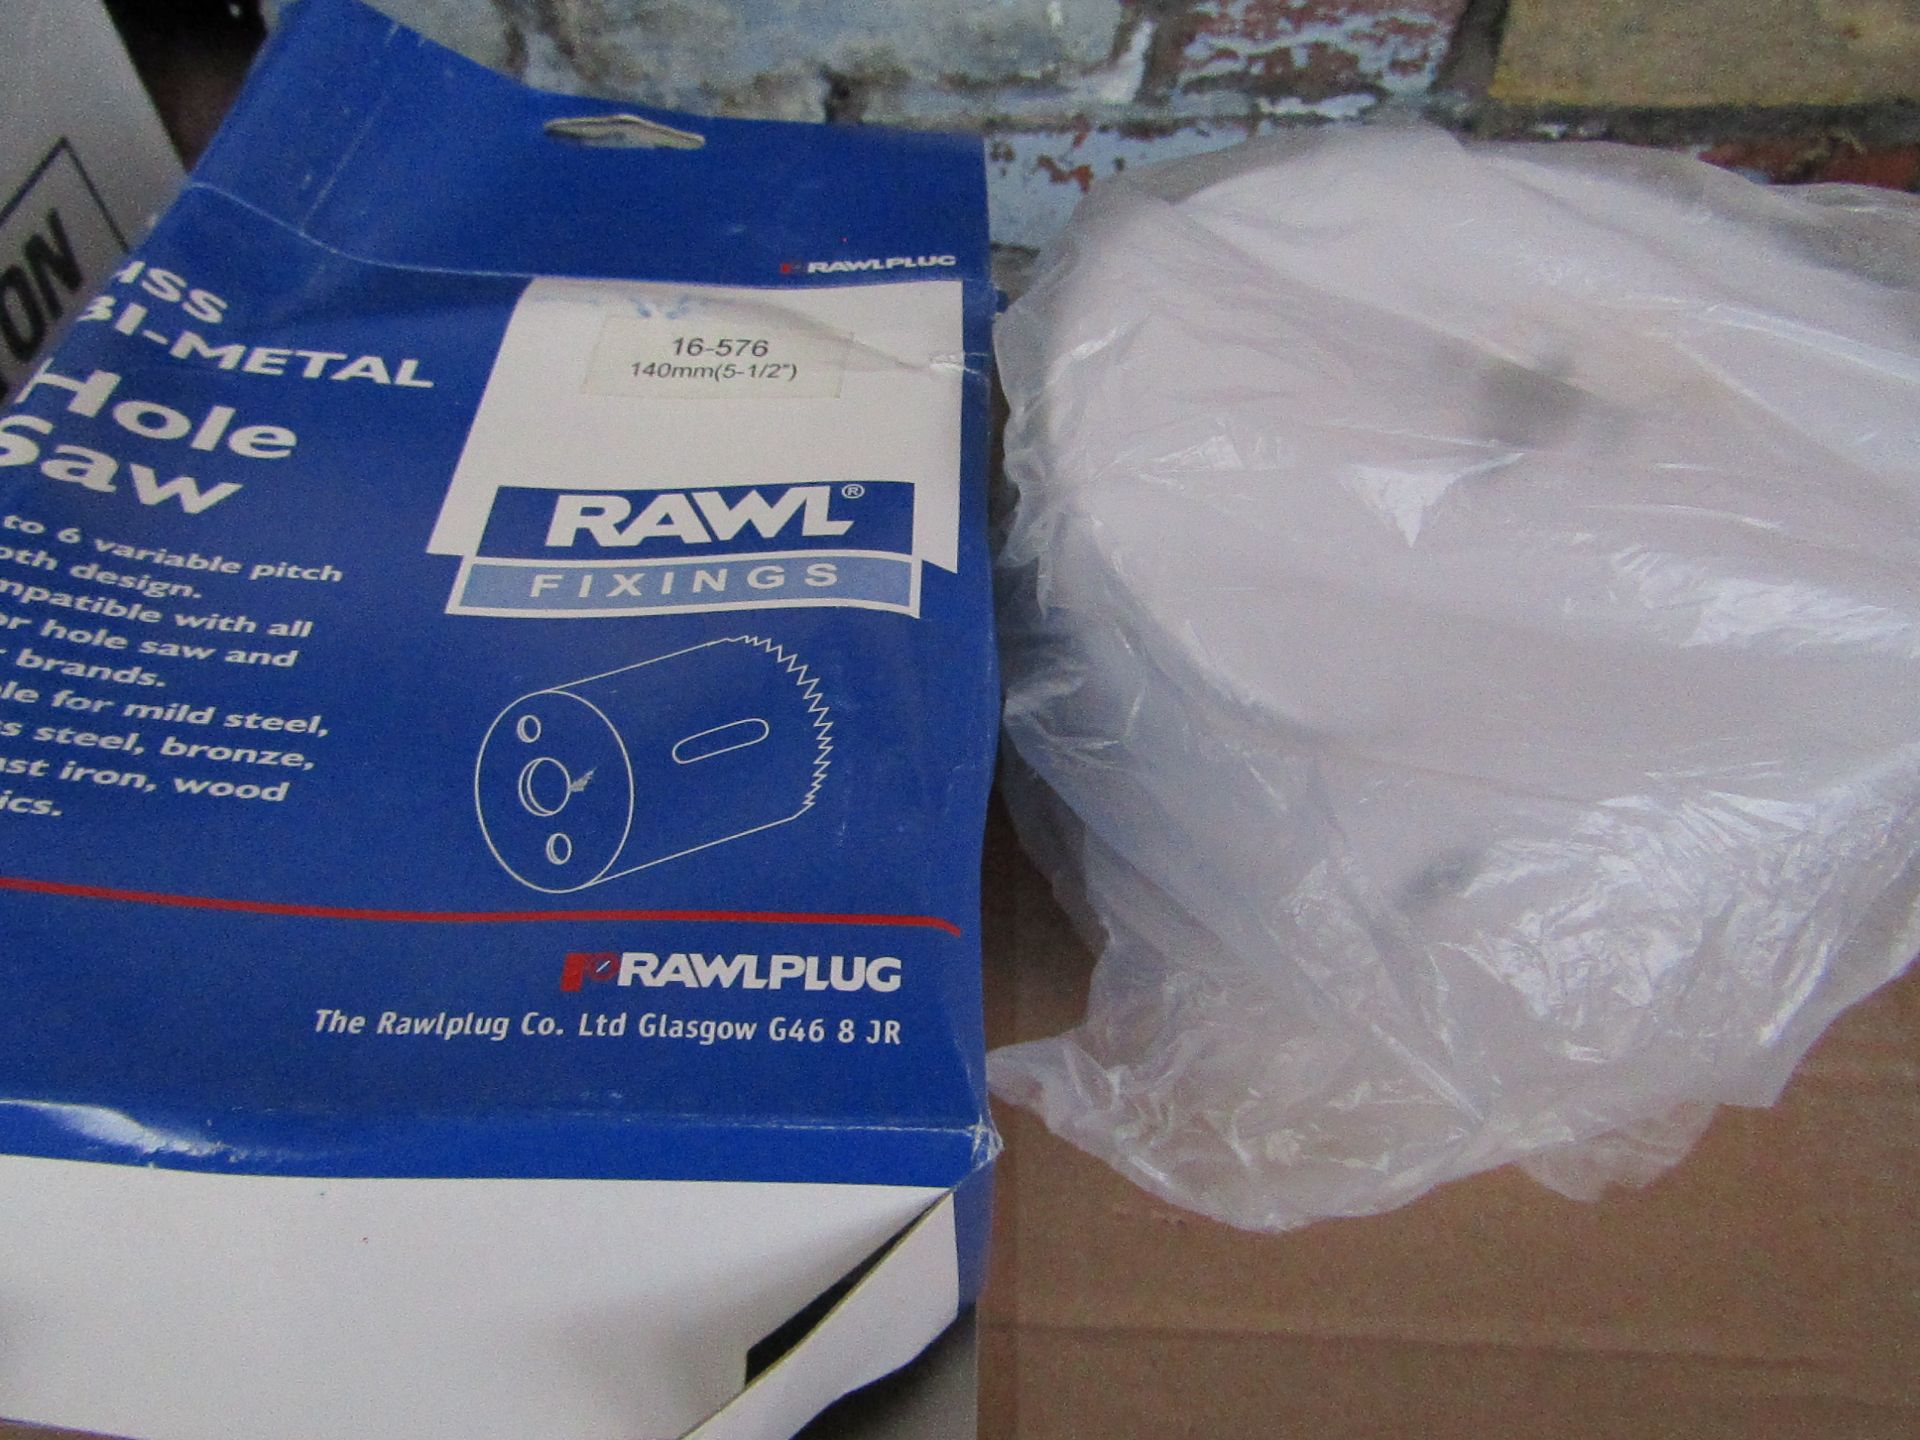 Rawl Fixings - HSS BI-METAL Hole Saw (140mm) - New & Boxed.